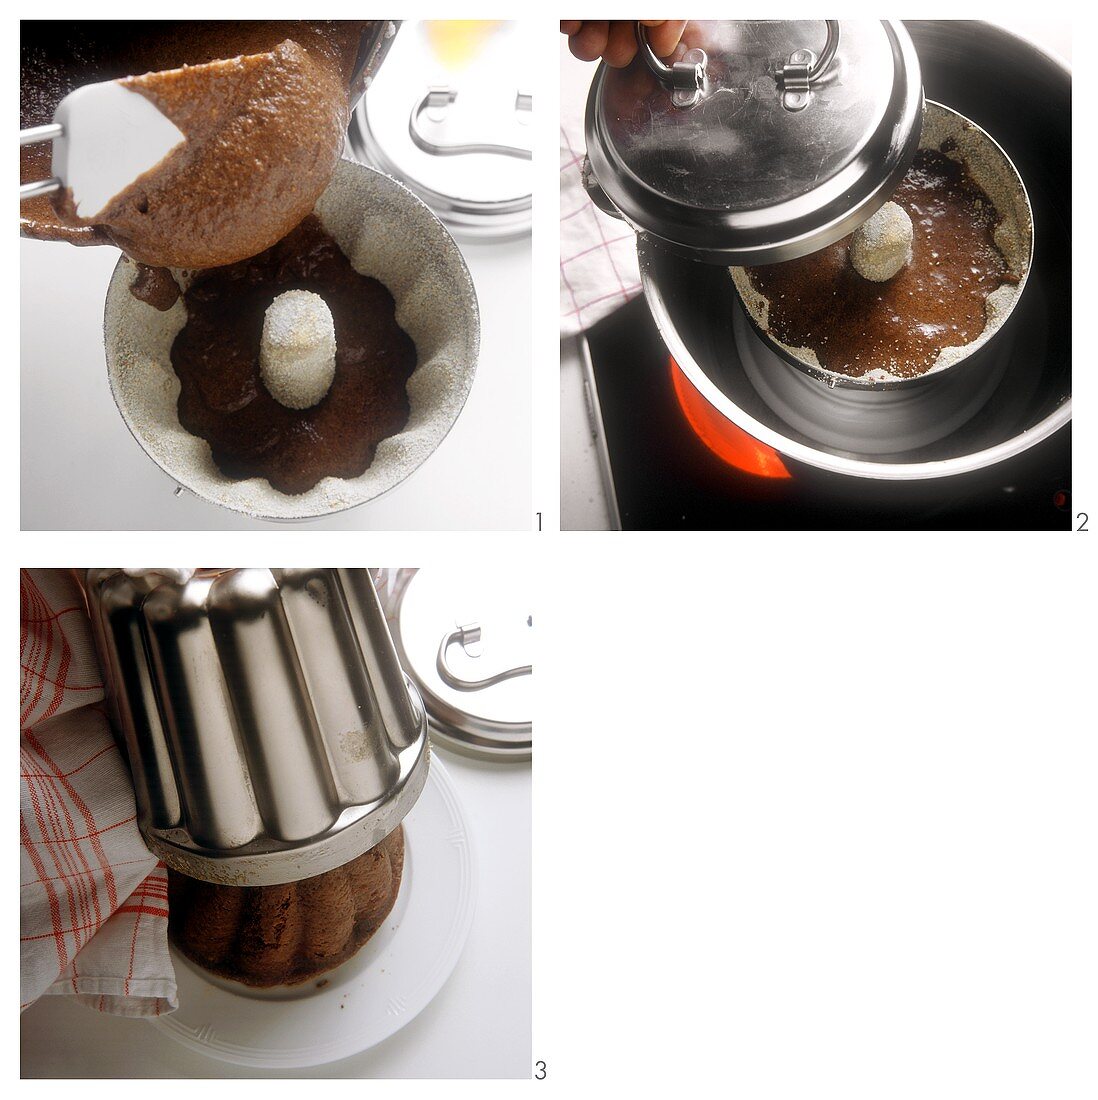 Making chocolate pudding